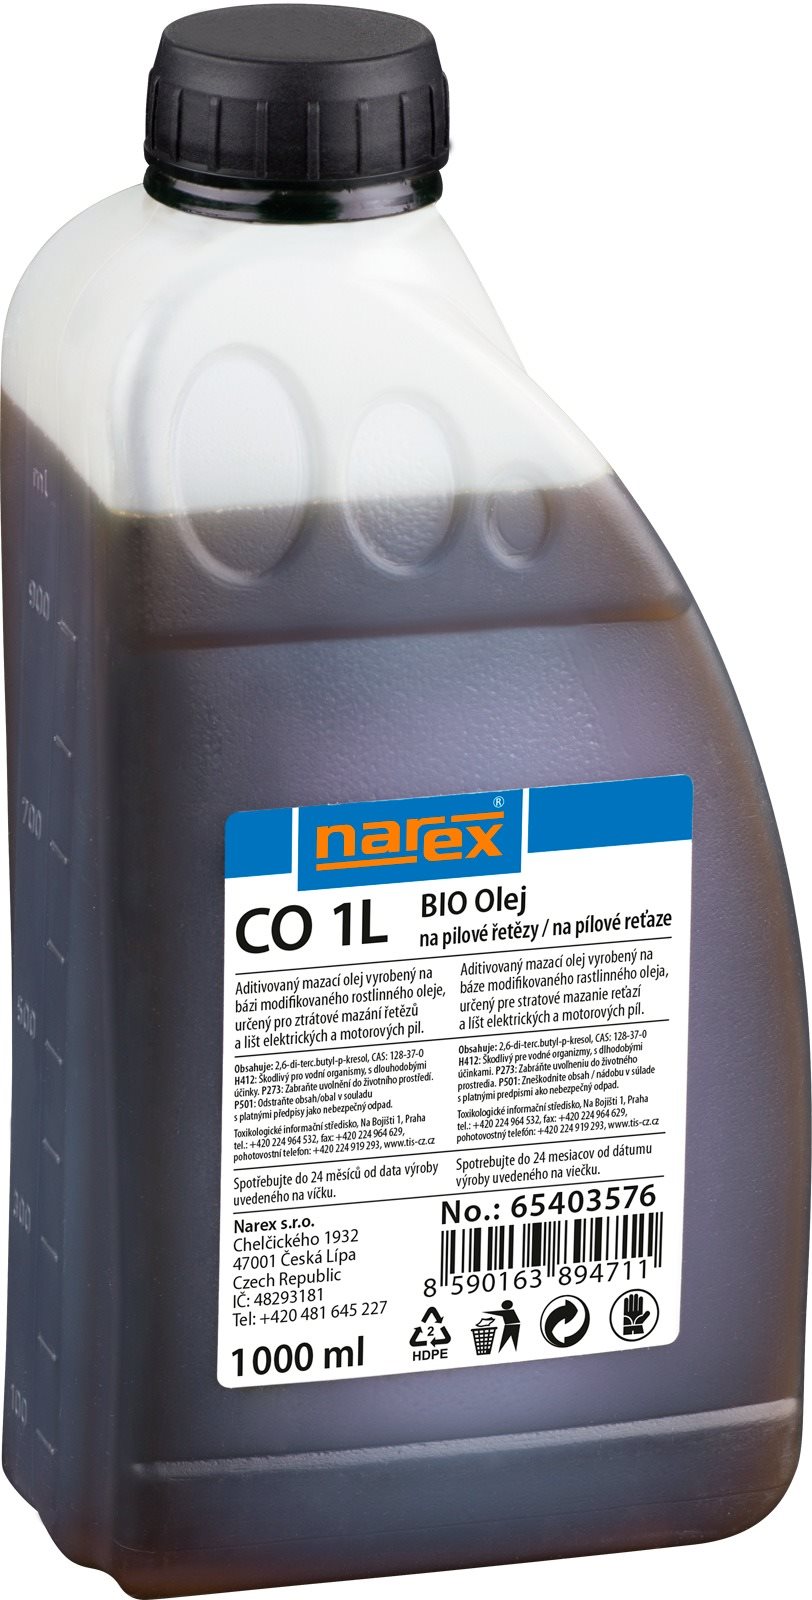 Narex CO 1 liter